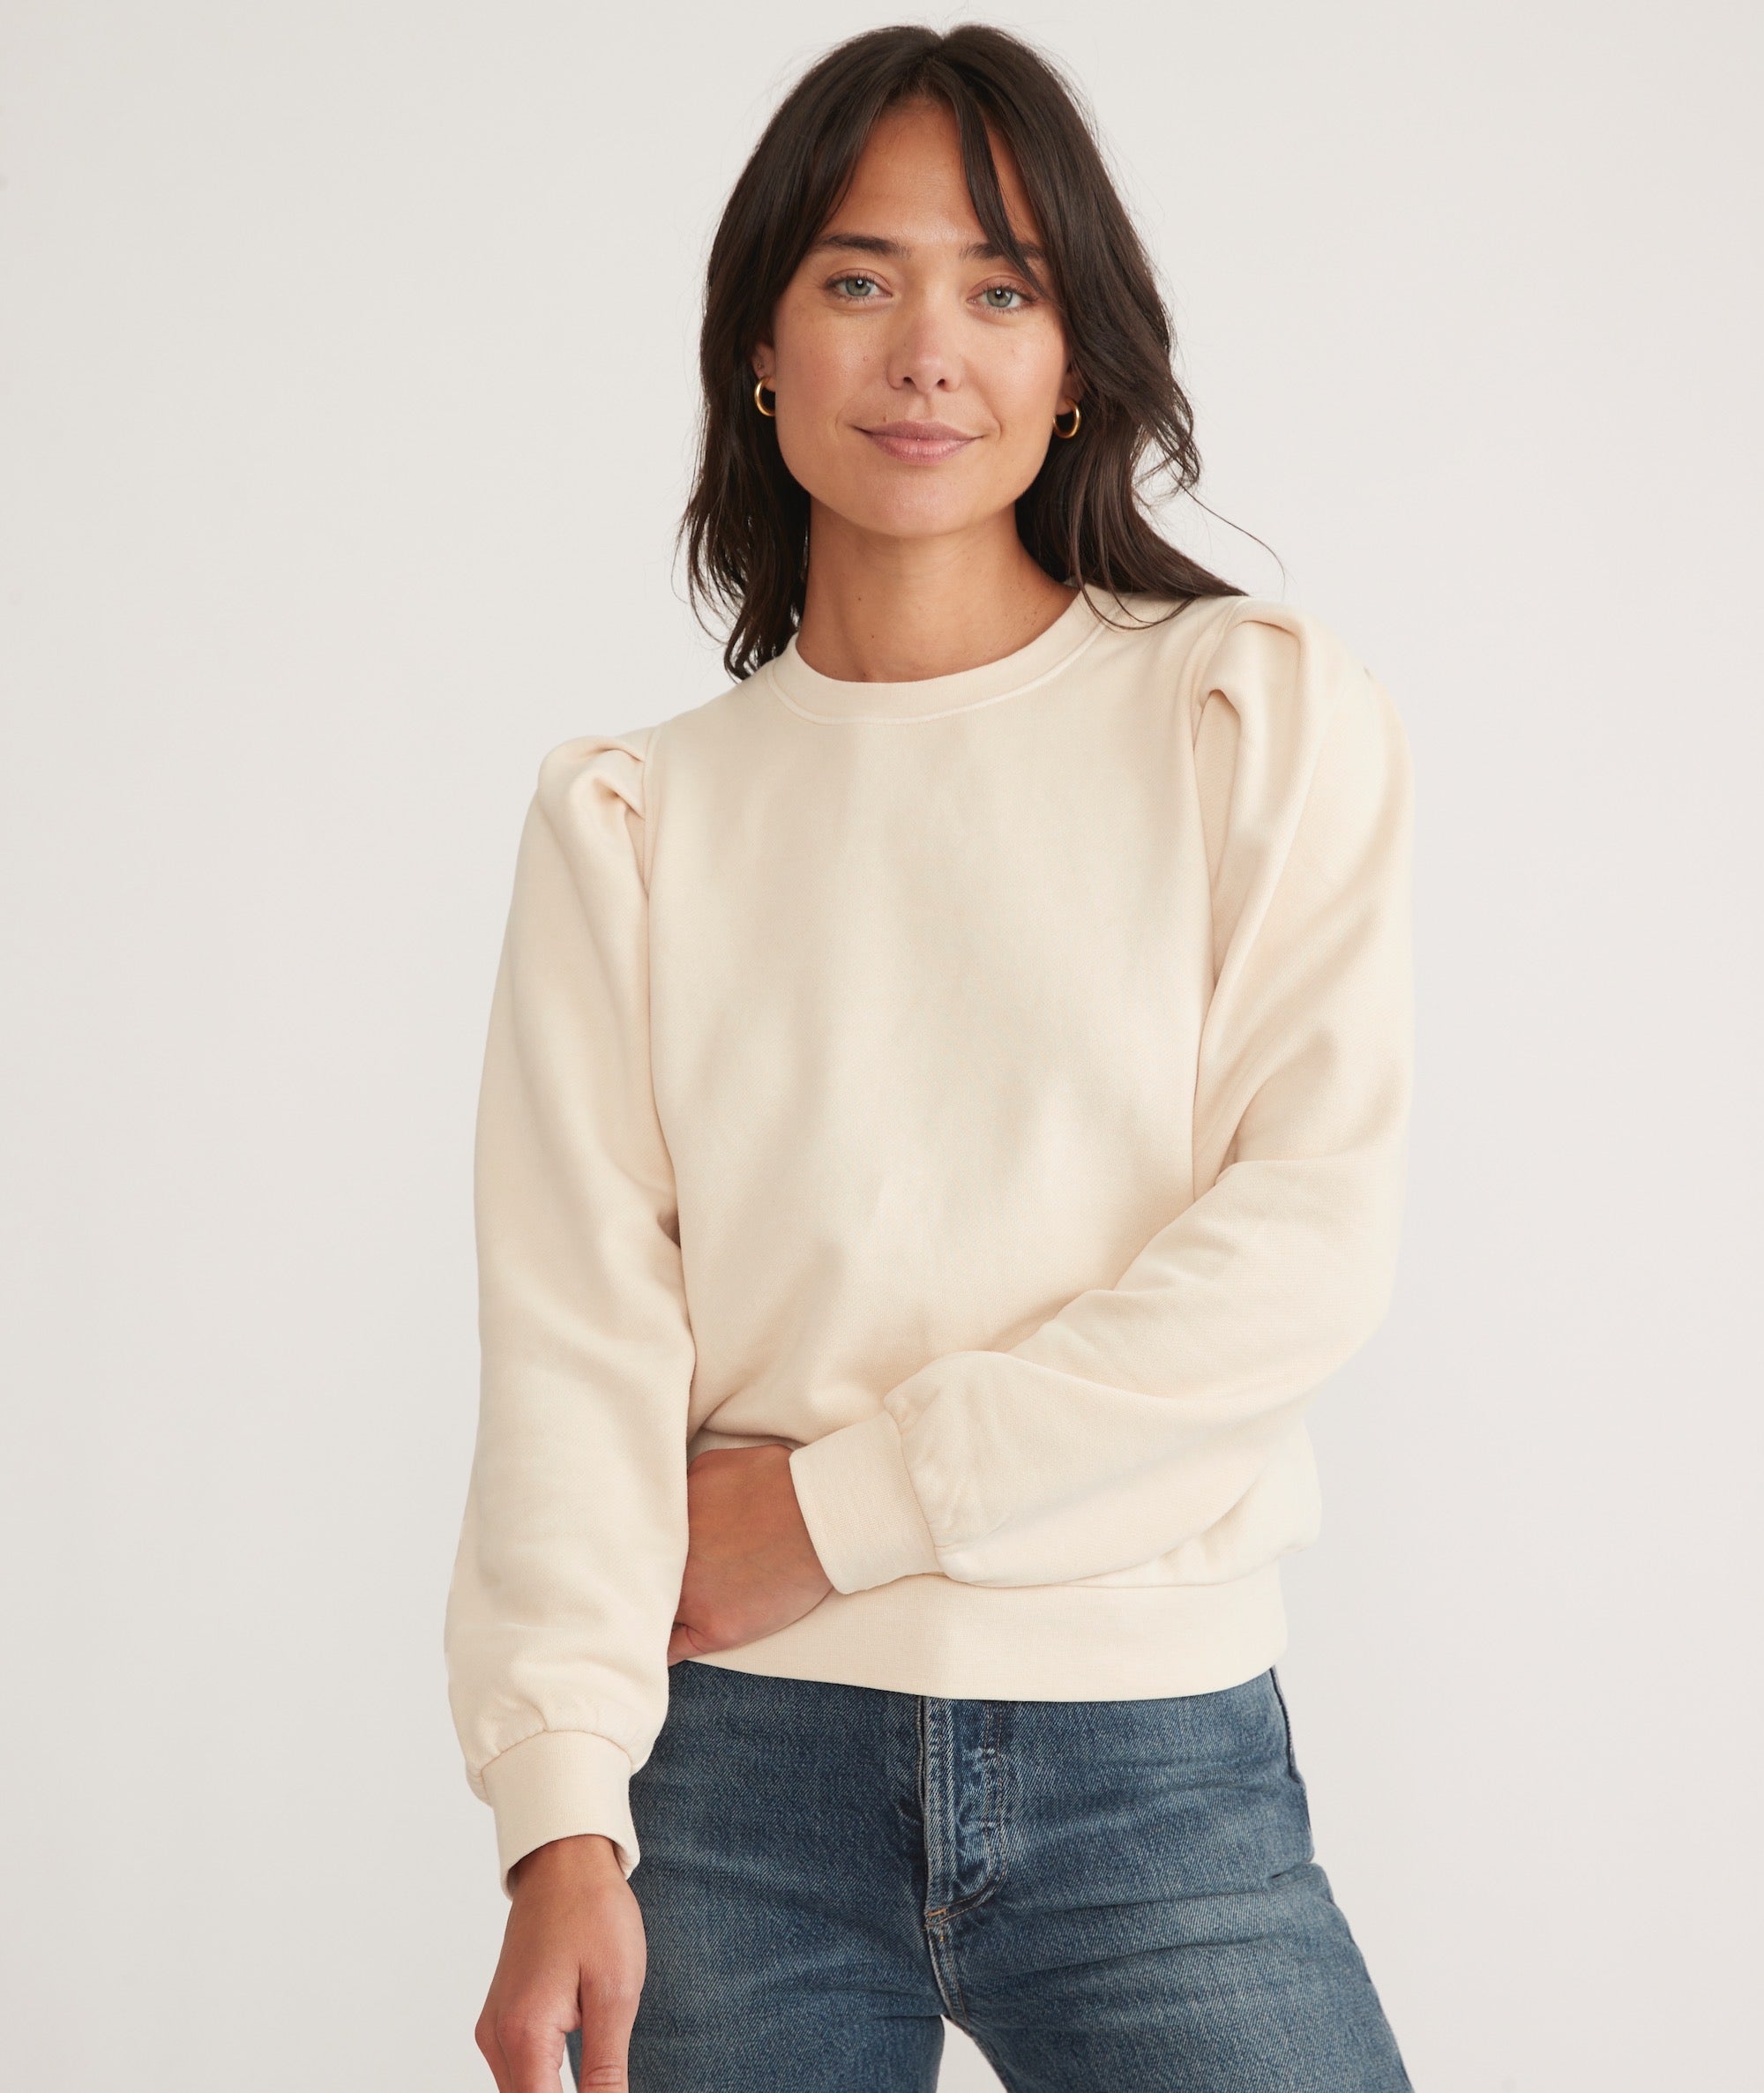 Sweatshirt Pullover Long Sleeves Brushed Lining Puff Sleeve